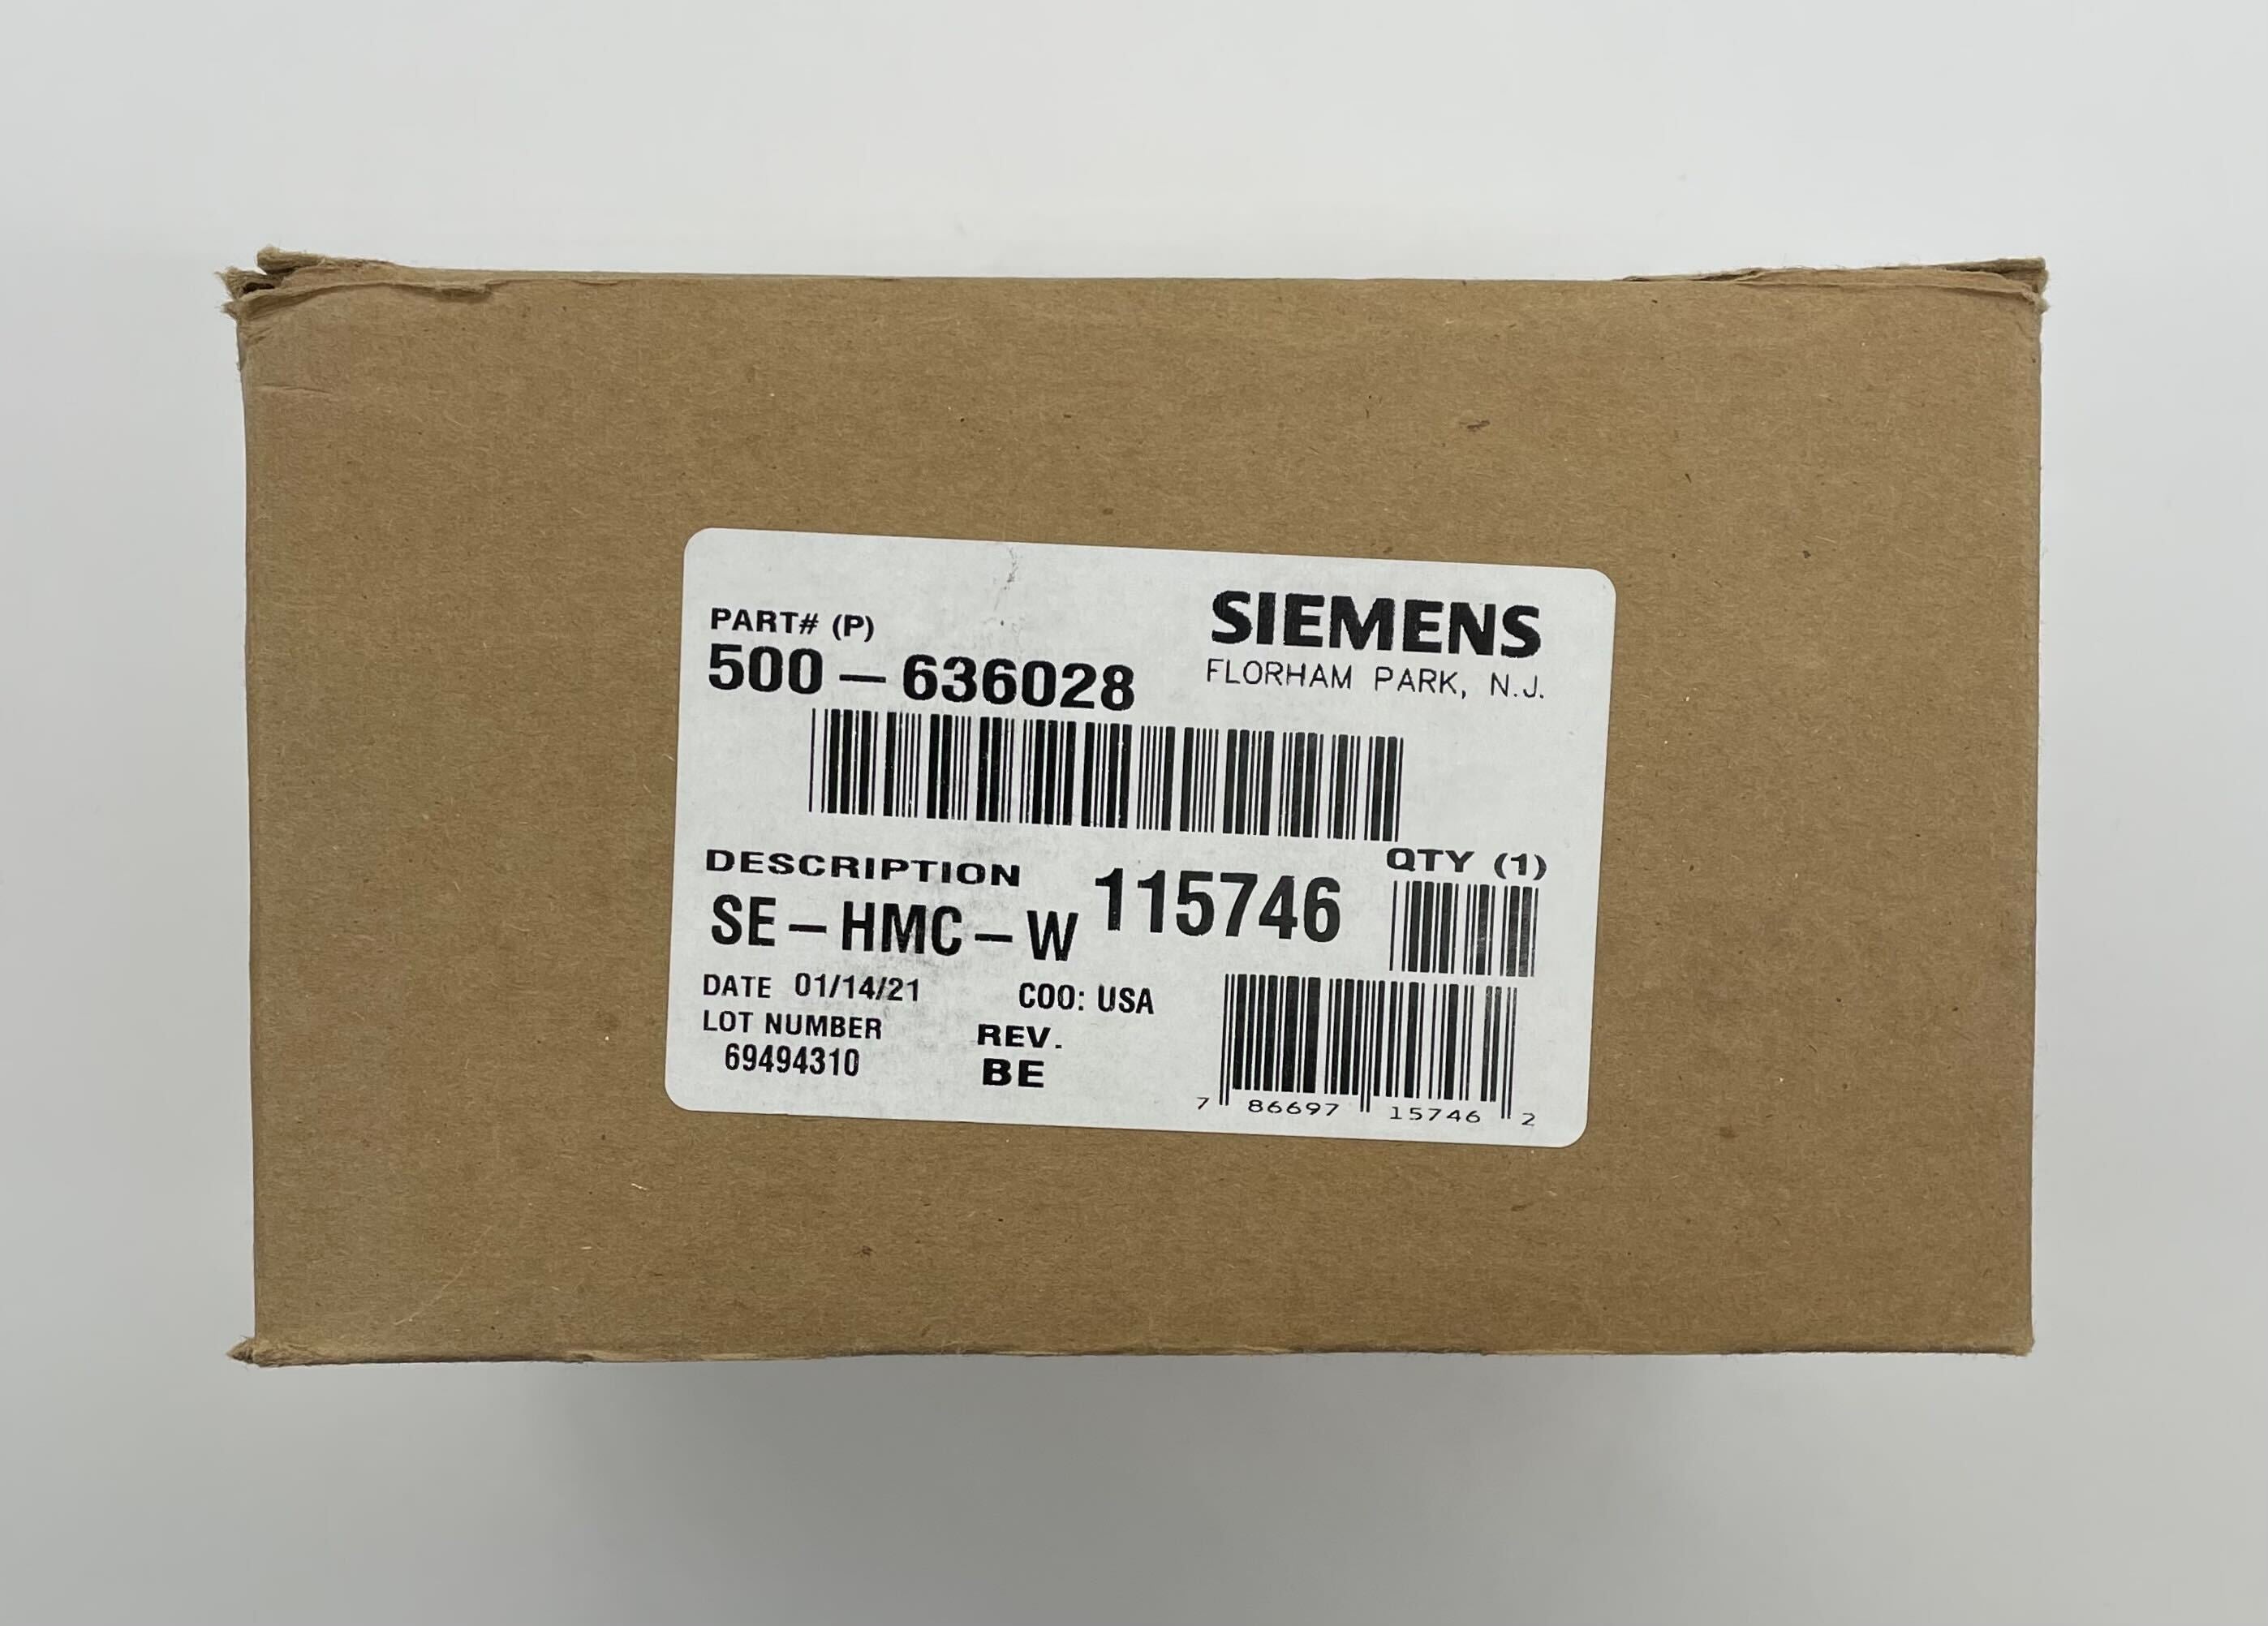 Siemens SE-HMC-W